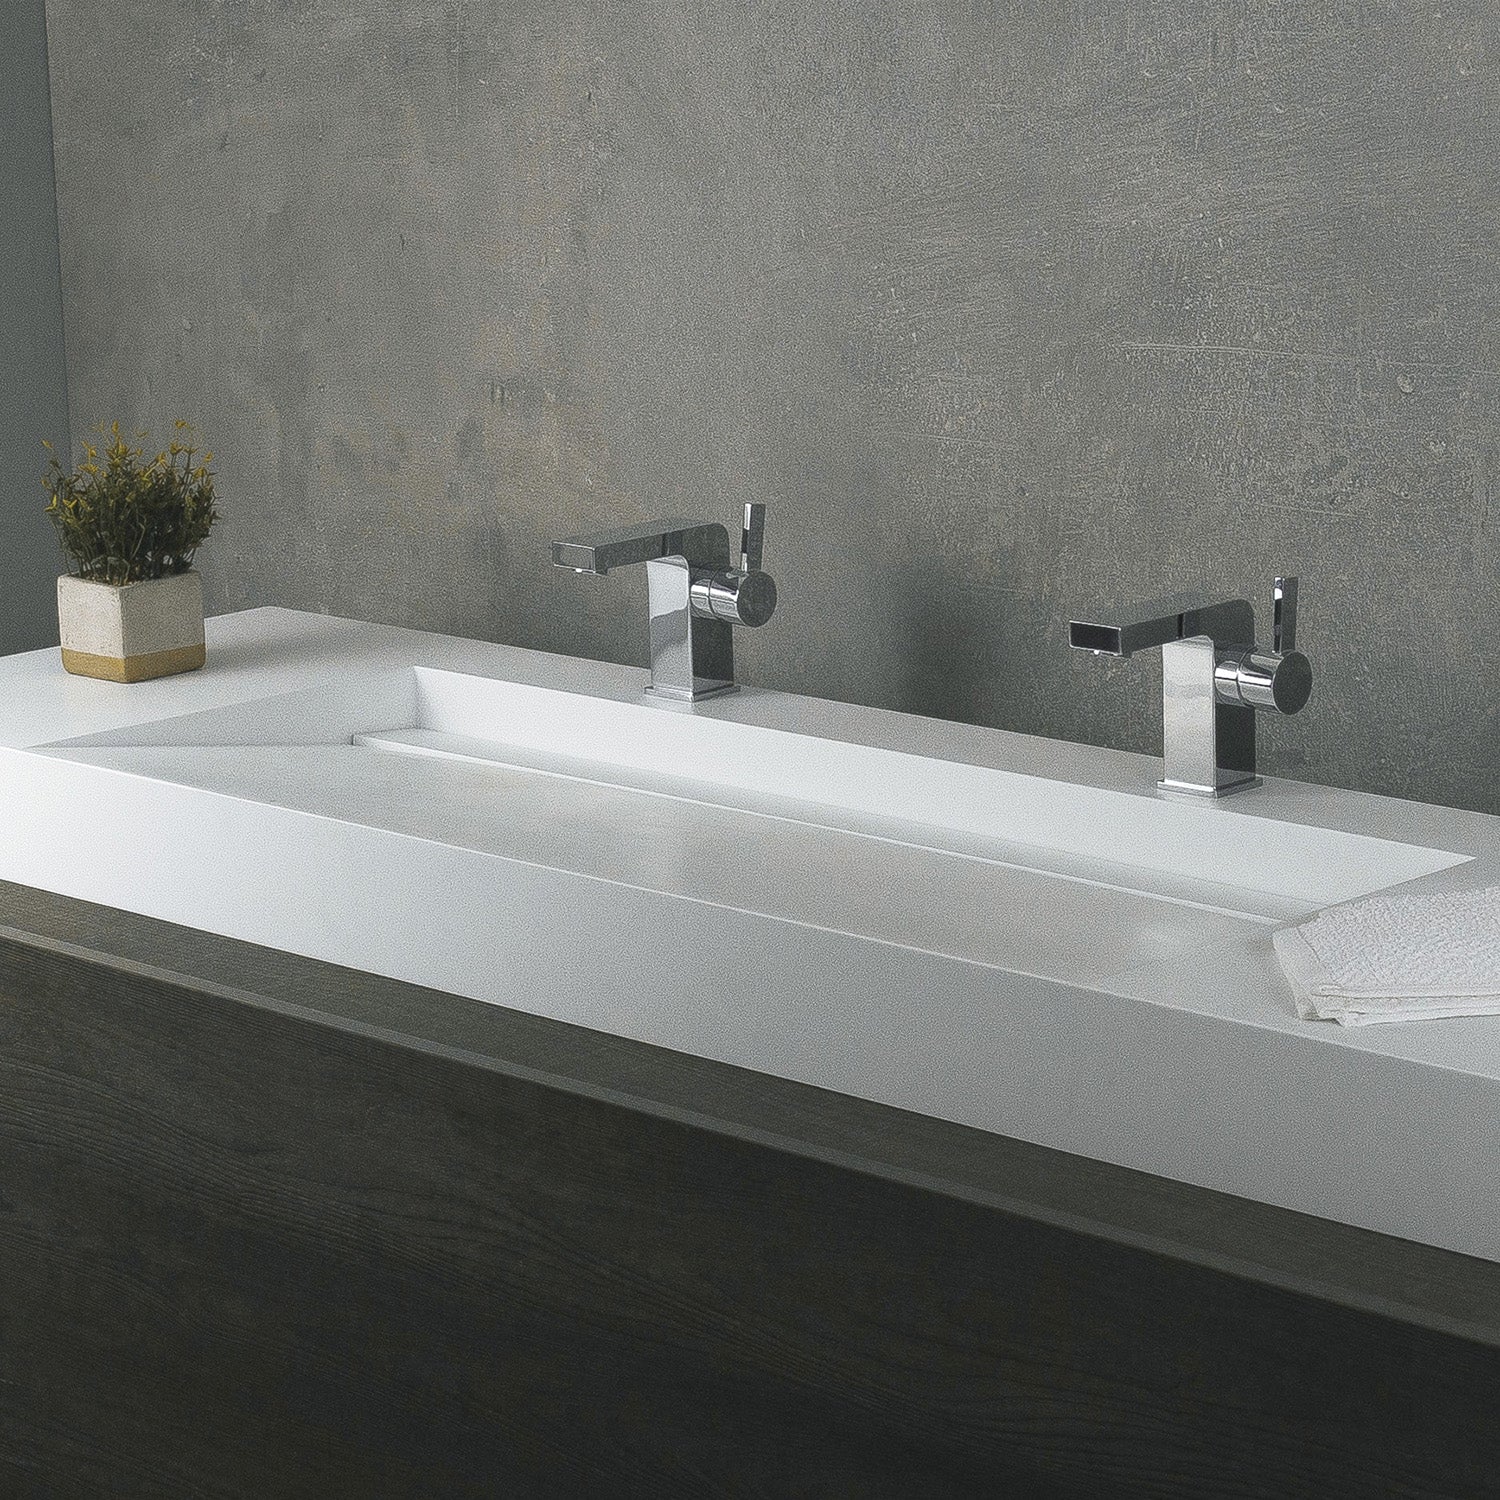 Fregadero de baño DAX de superficie sólida, rectangular, doble cuenco, montaje superior, acabado blanco mate, 62-4/5 x 18-7/8 x 4 pulgadas (DAX-AB-1371)